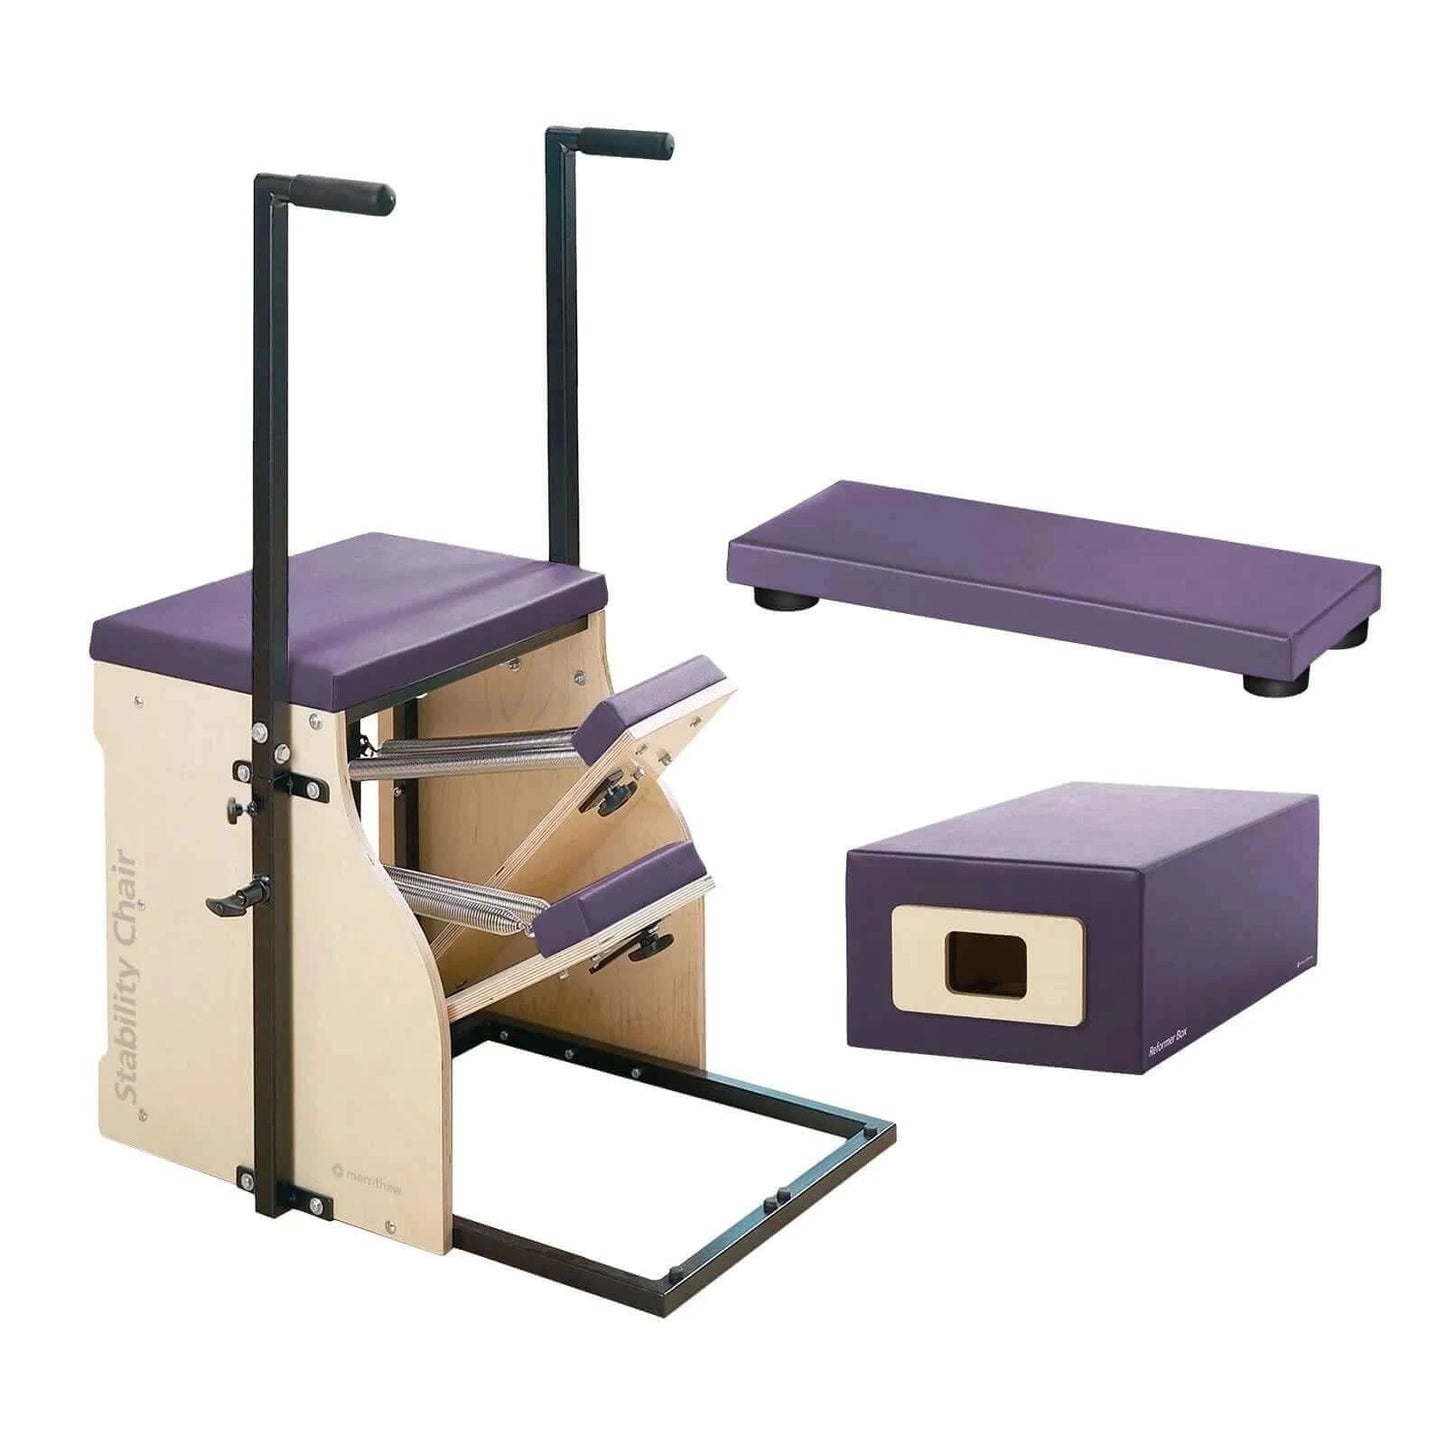 Purple Impulse Merrithew™ Pilates Split-Pedal Stability Chair™ Bundle by Merrithew™ sold by Pilates Matters® by BSP LLC